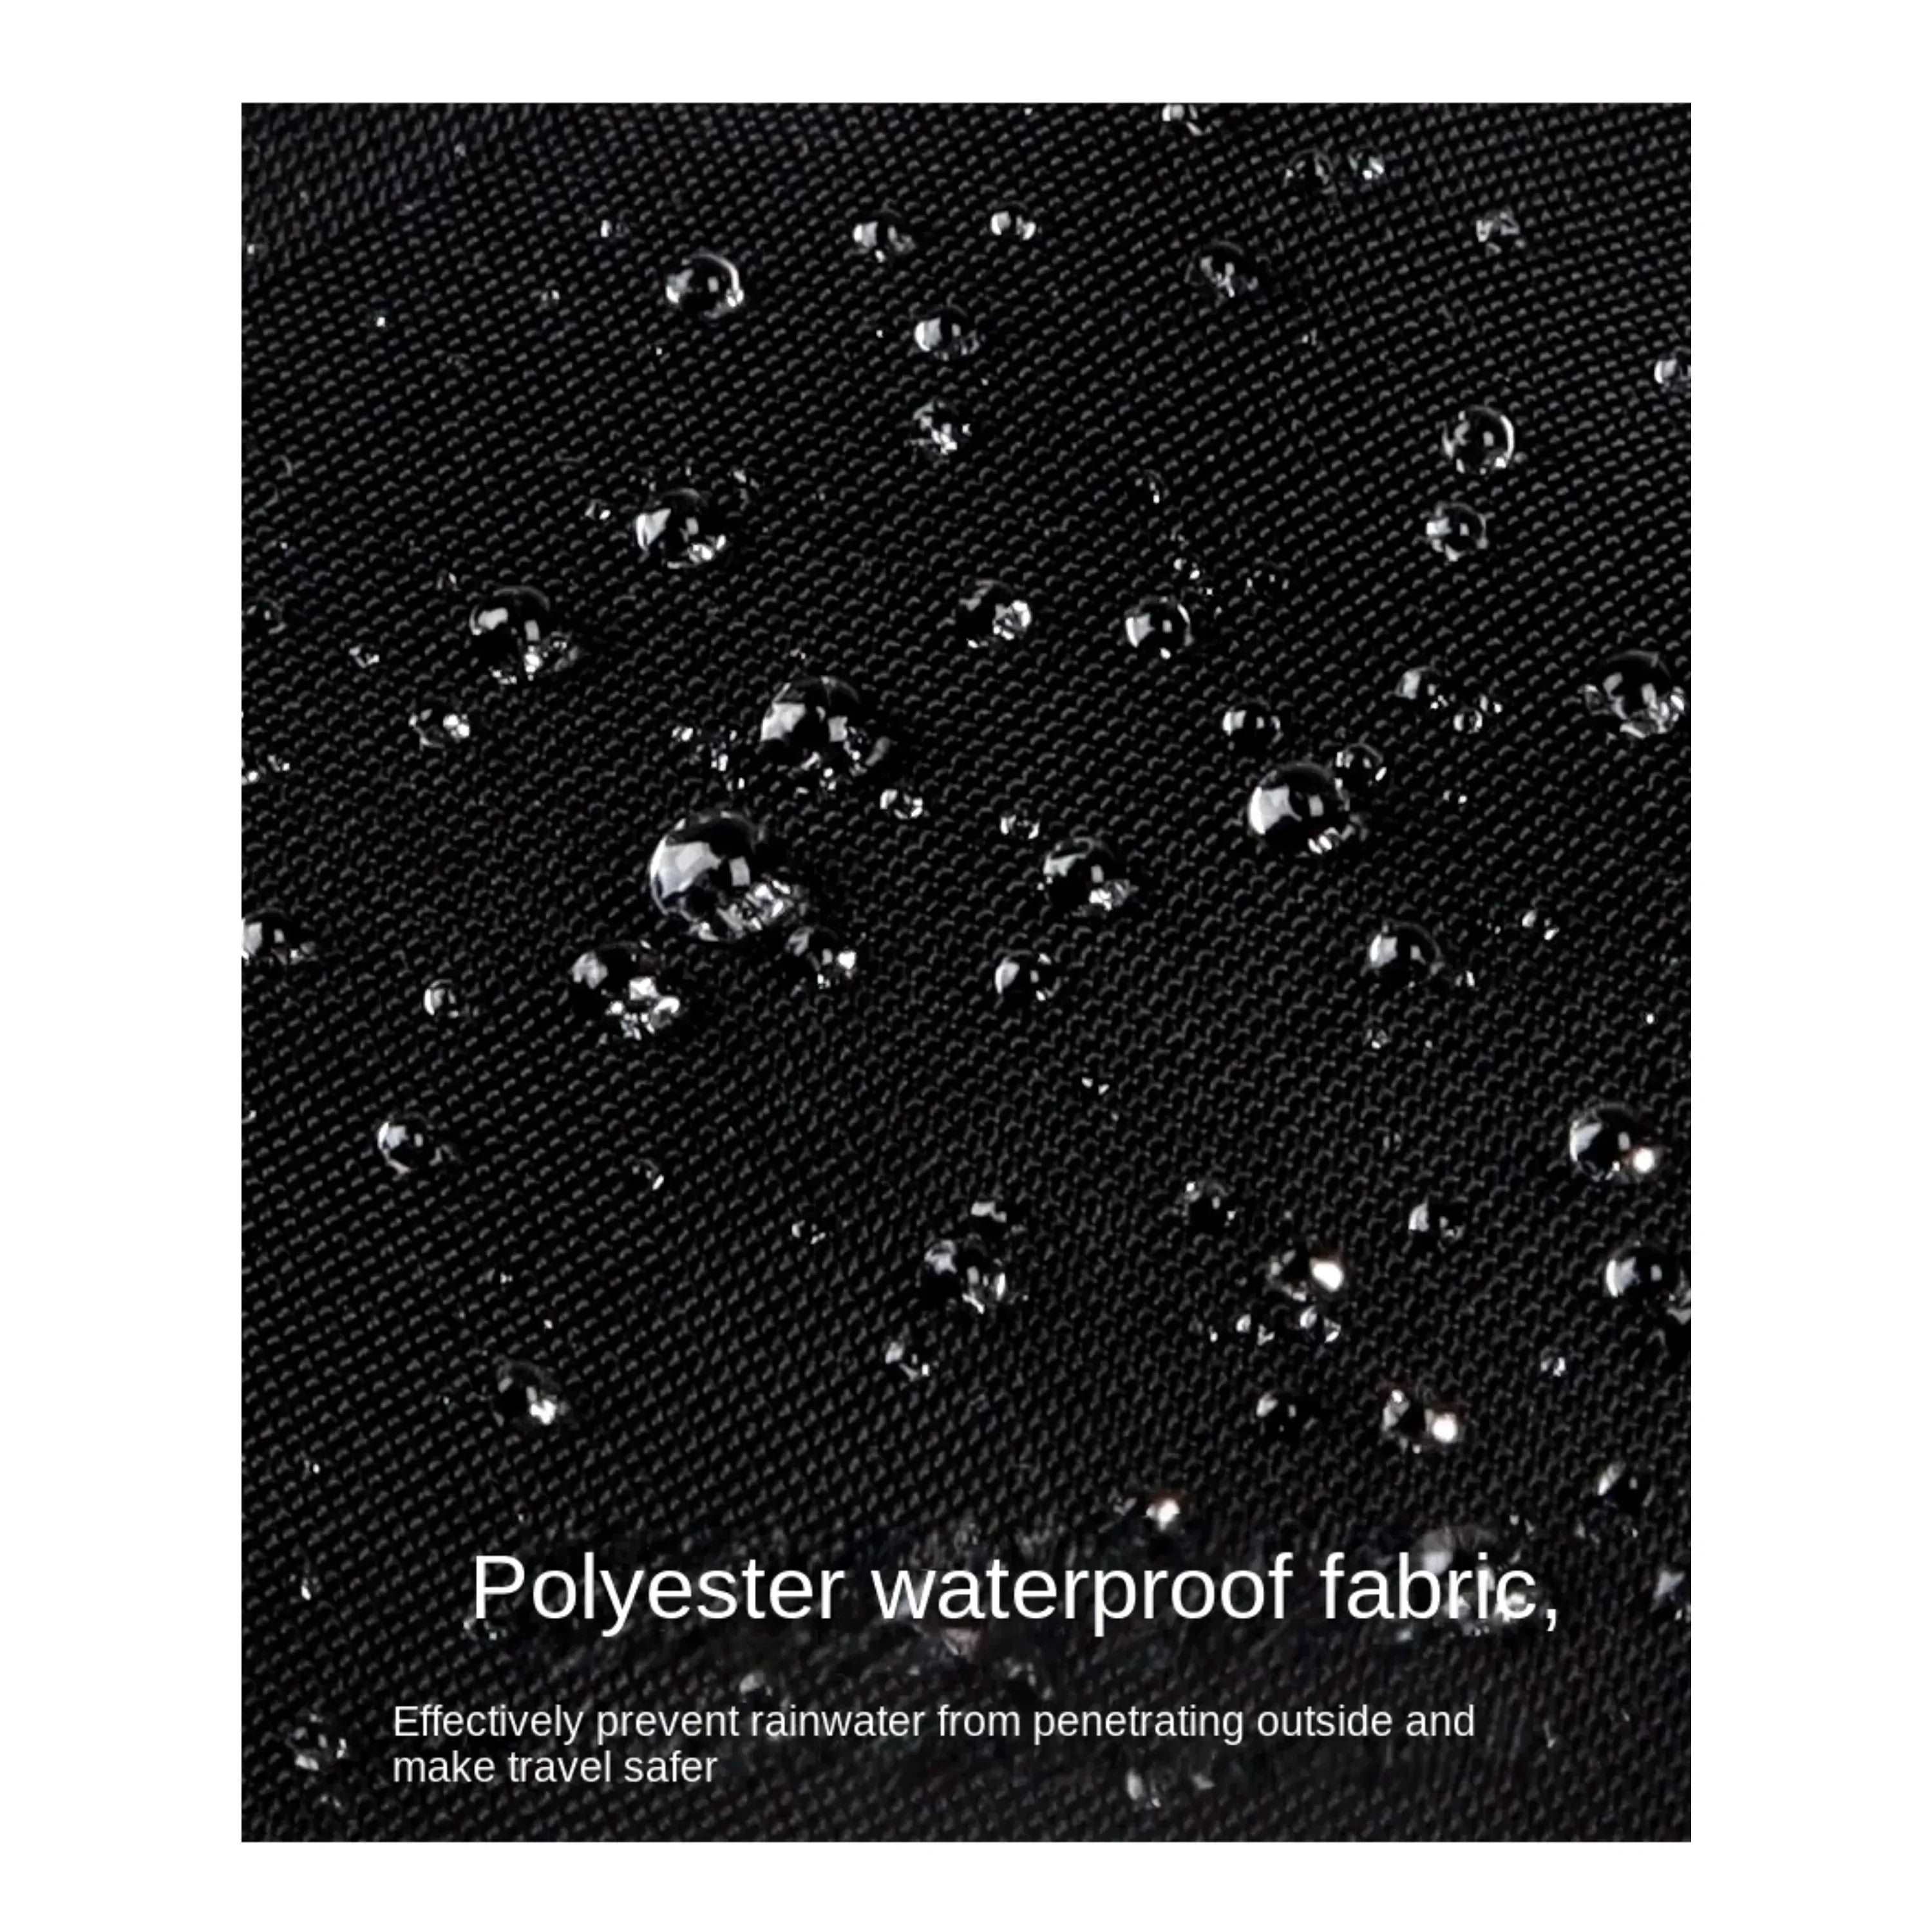 Polyester waterproof fabric